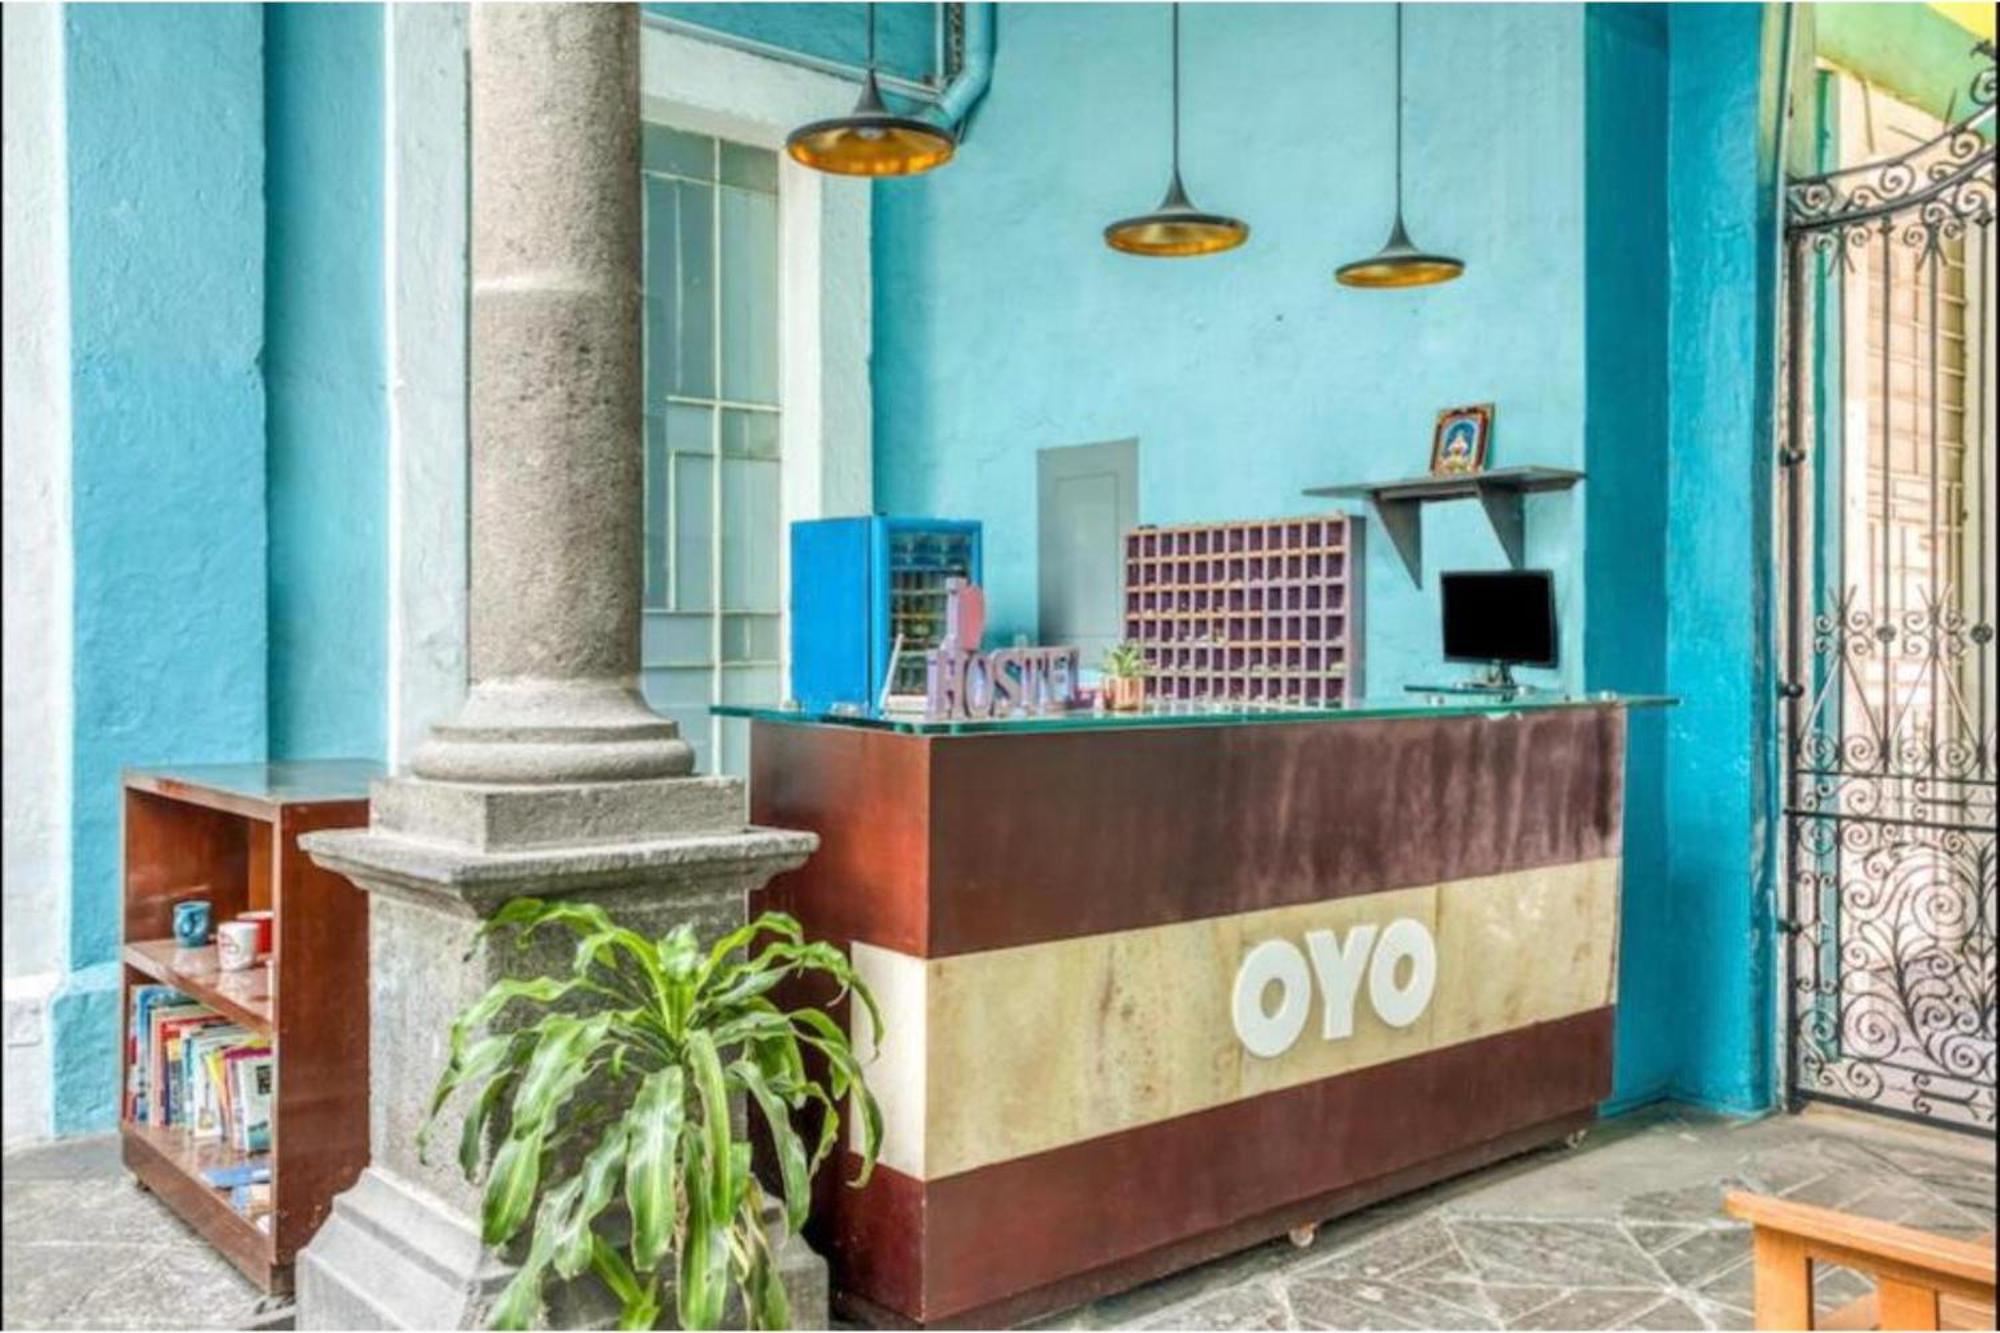 Oyo Hotel Casona Poblana 푸에블라 외부 사진